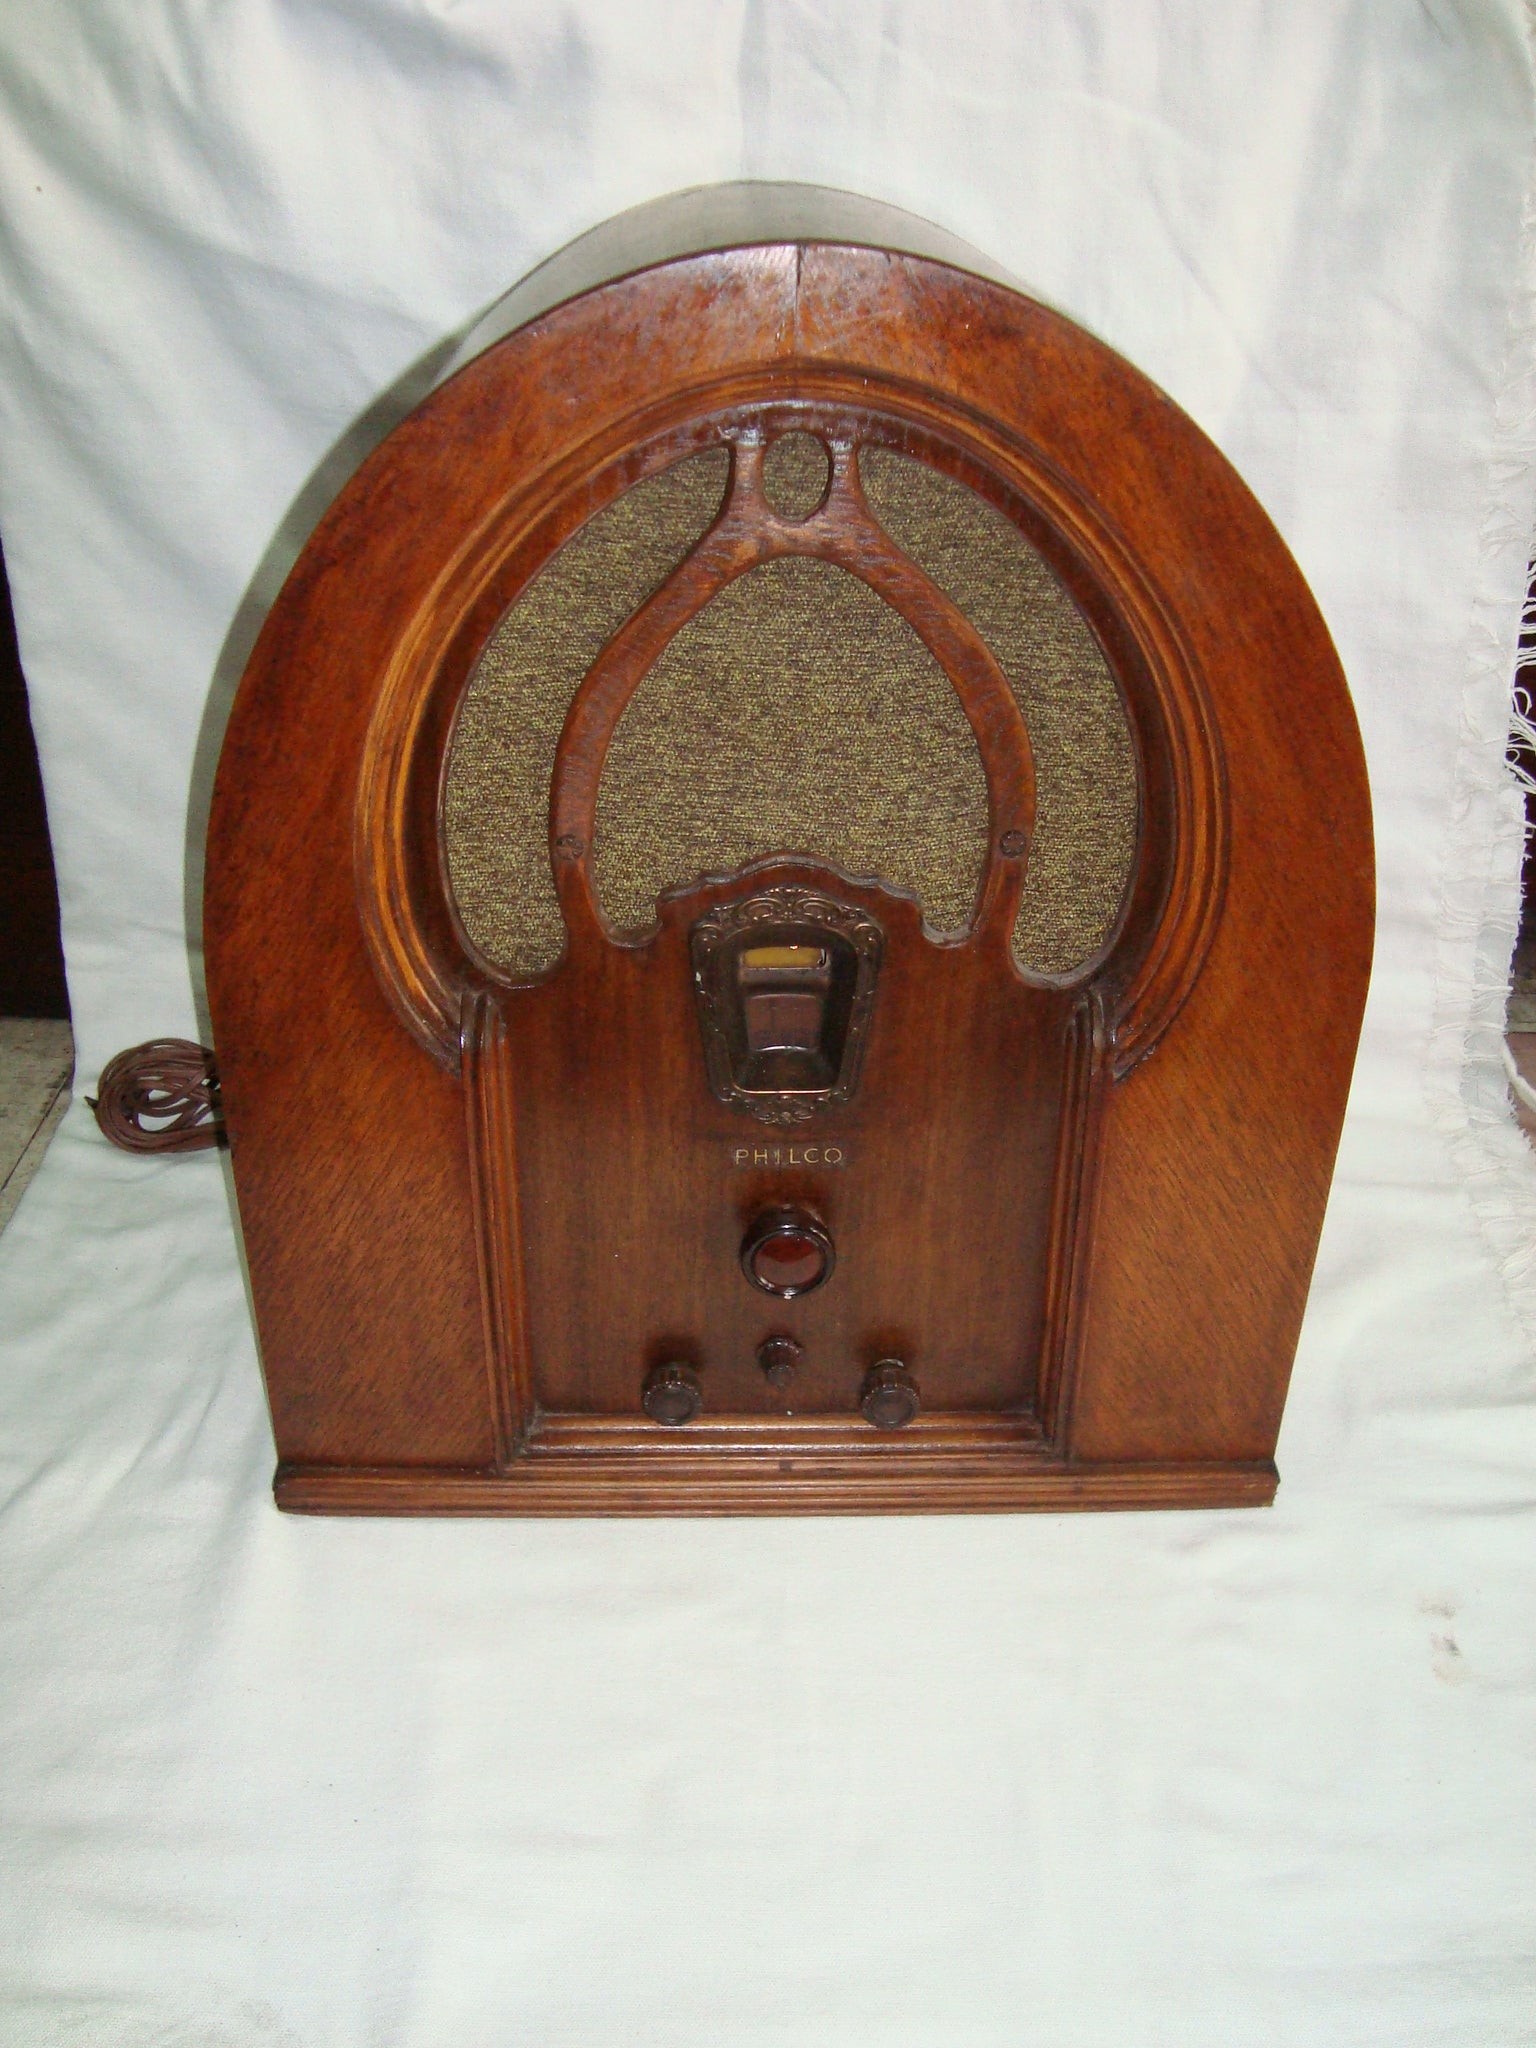 Philco Radio Model 71 110-Volts